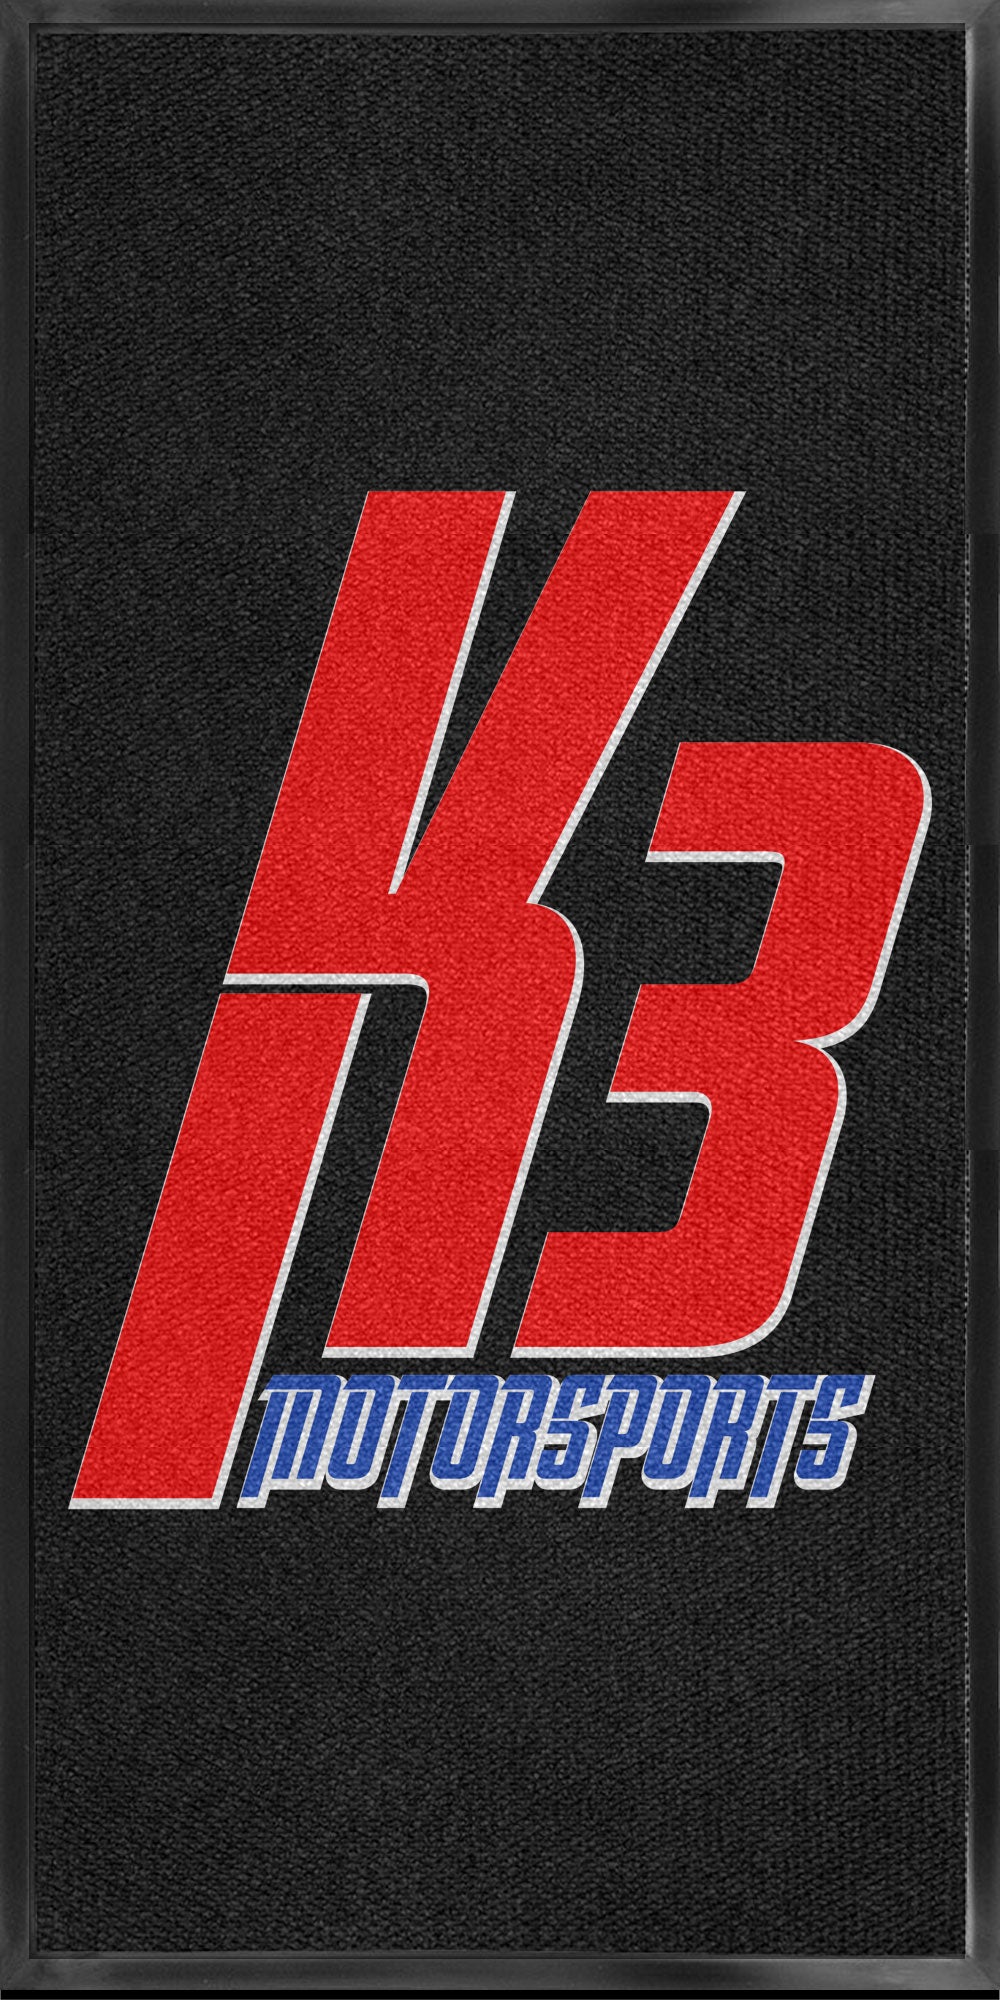 K3 Motorsports § 6 X 12 Luxury Berber Inlay - The Personalized Doormats Company